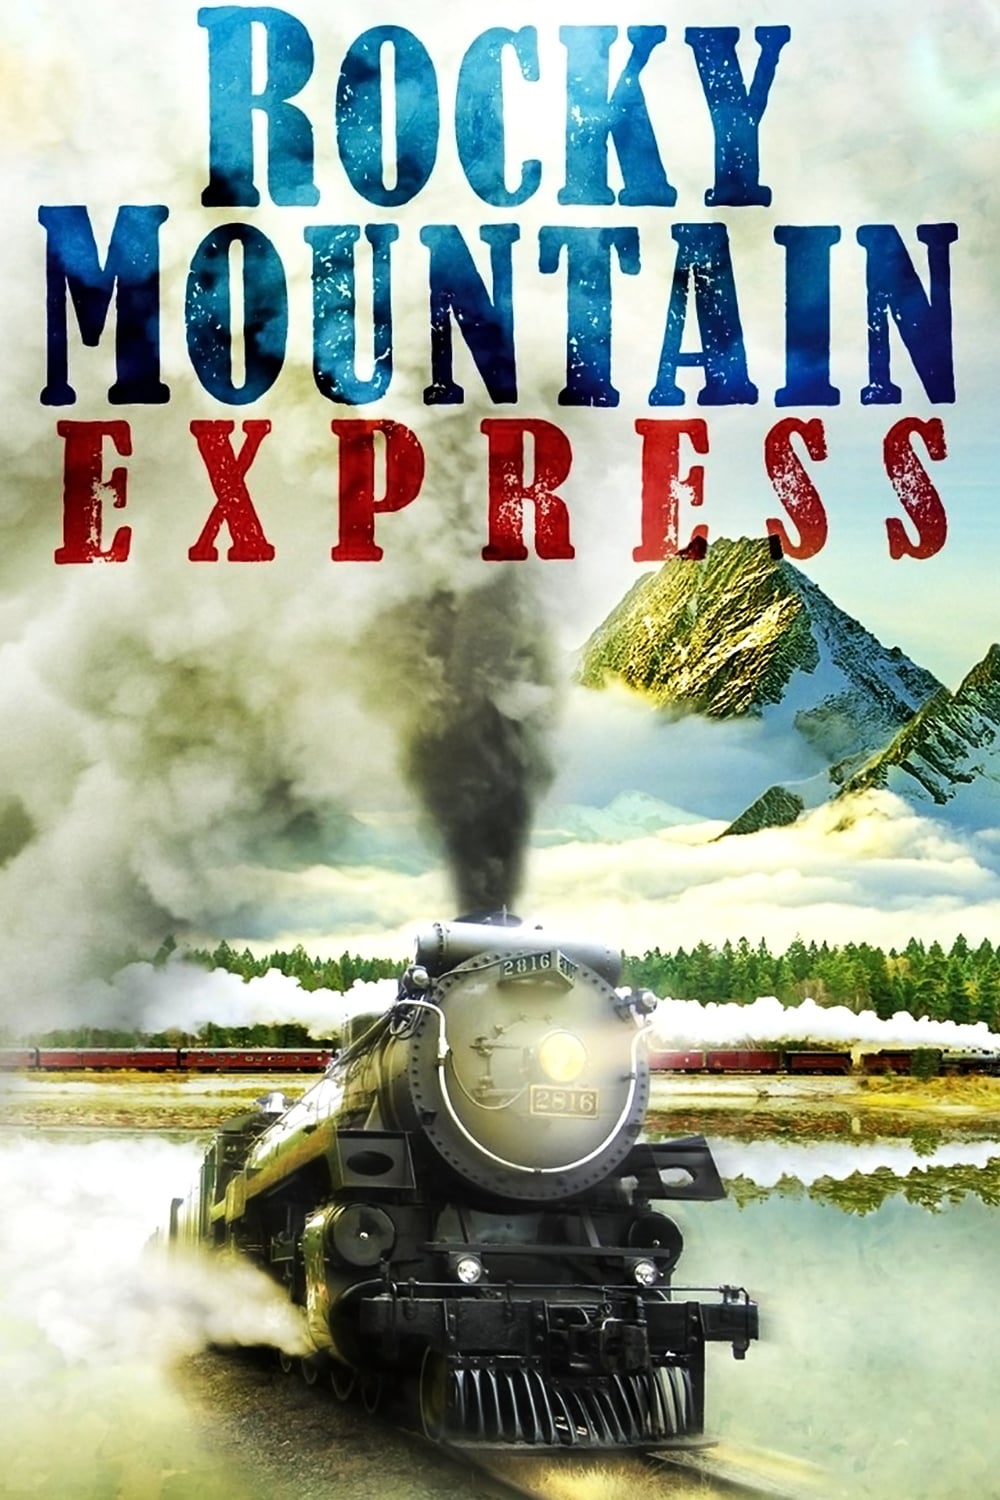 Rocky Mountain Express